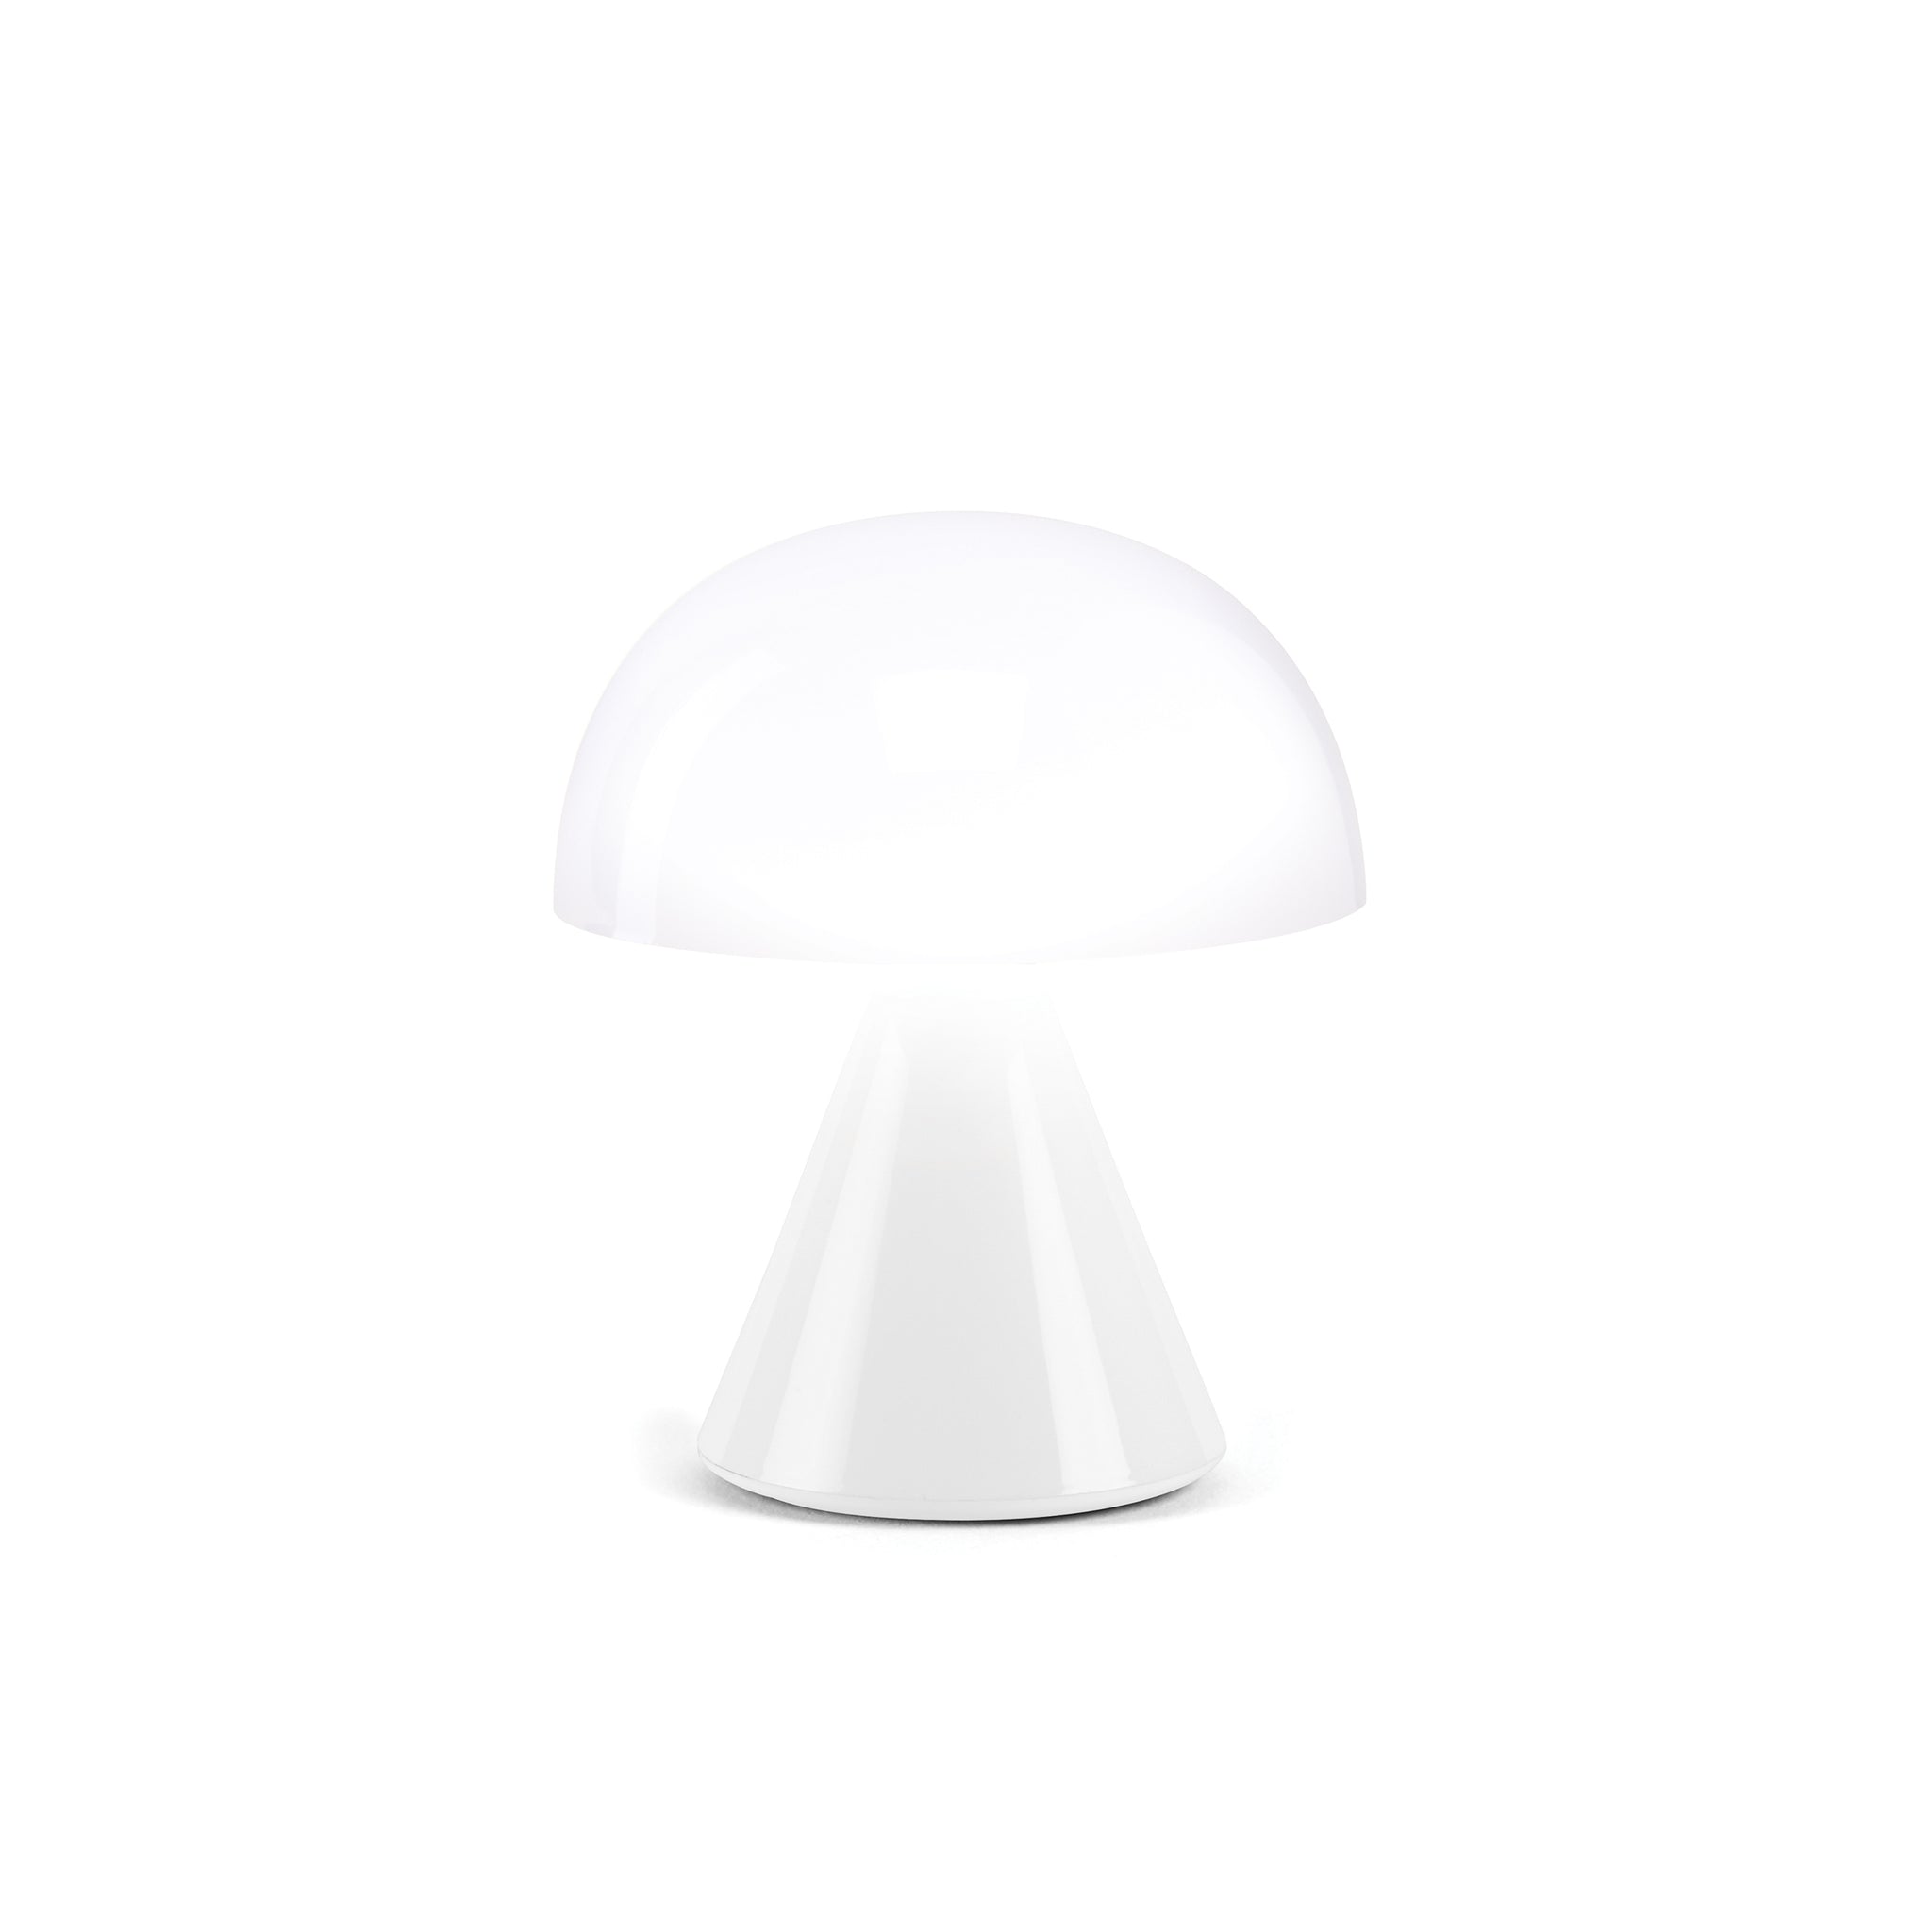 Lexon Mina Small│Oplaadbare LED lamp Glossy White│art. LH60WG│voorkant met wit licht aan